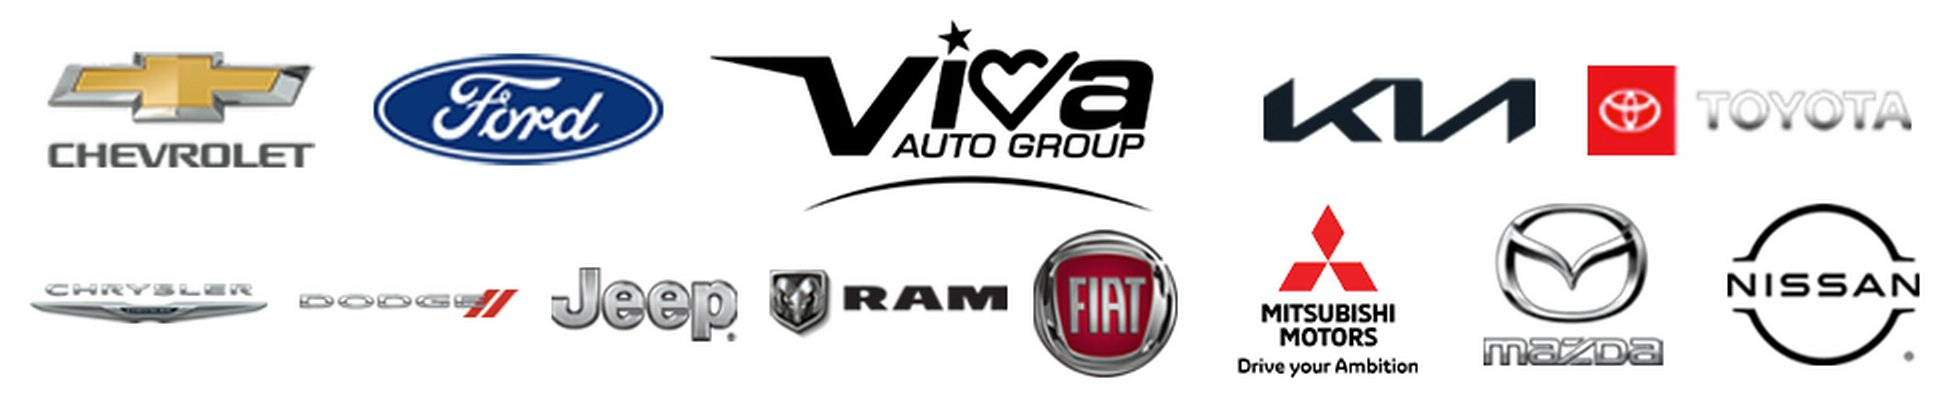 Viva Auto Group El Paso TX